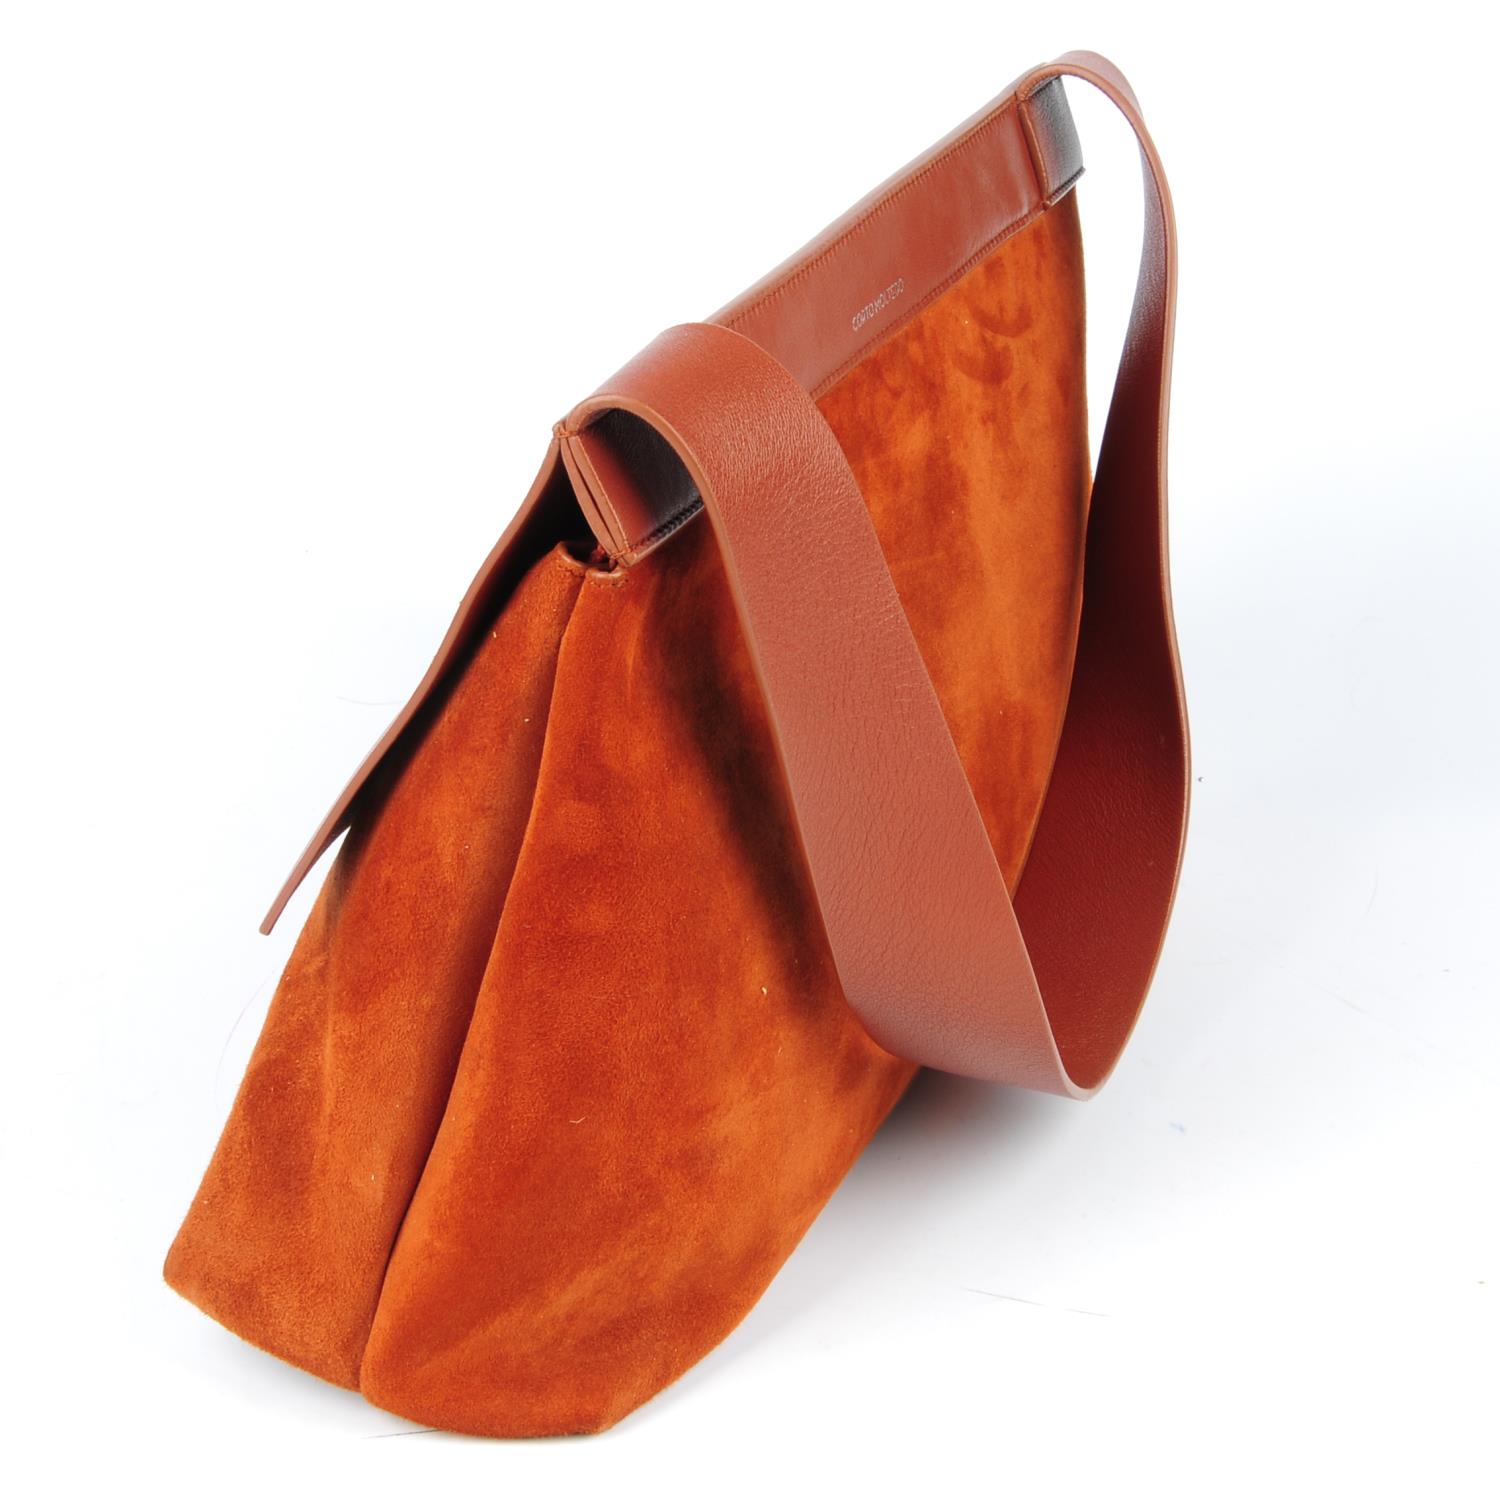 CORTO MOLTEDO - a tan suede and leather handbag. - Image 3 of 4